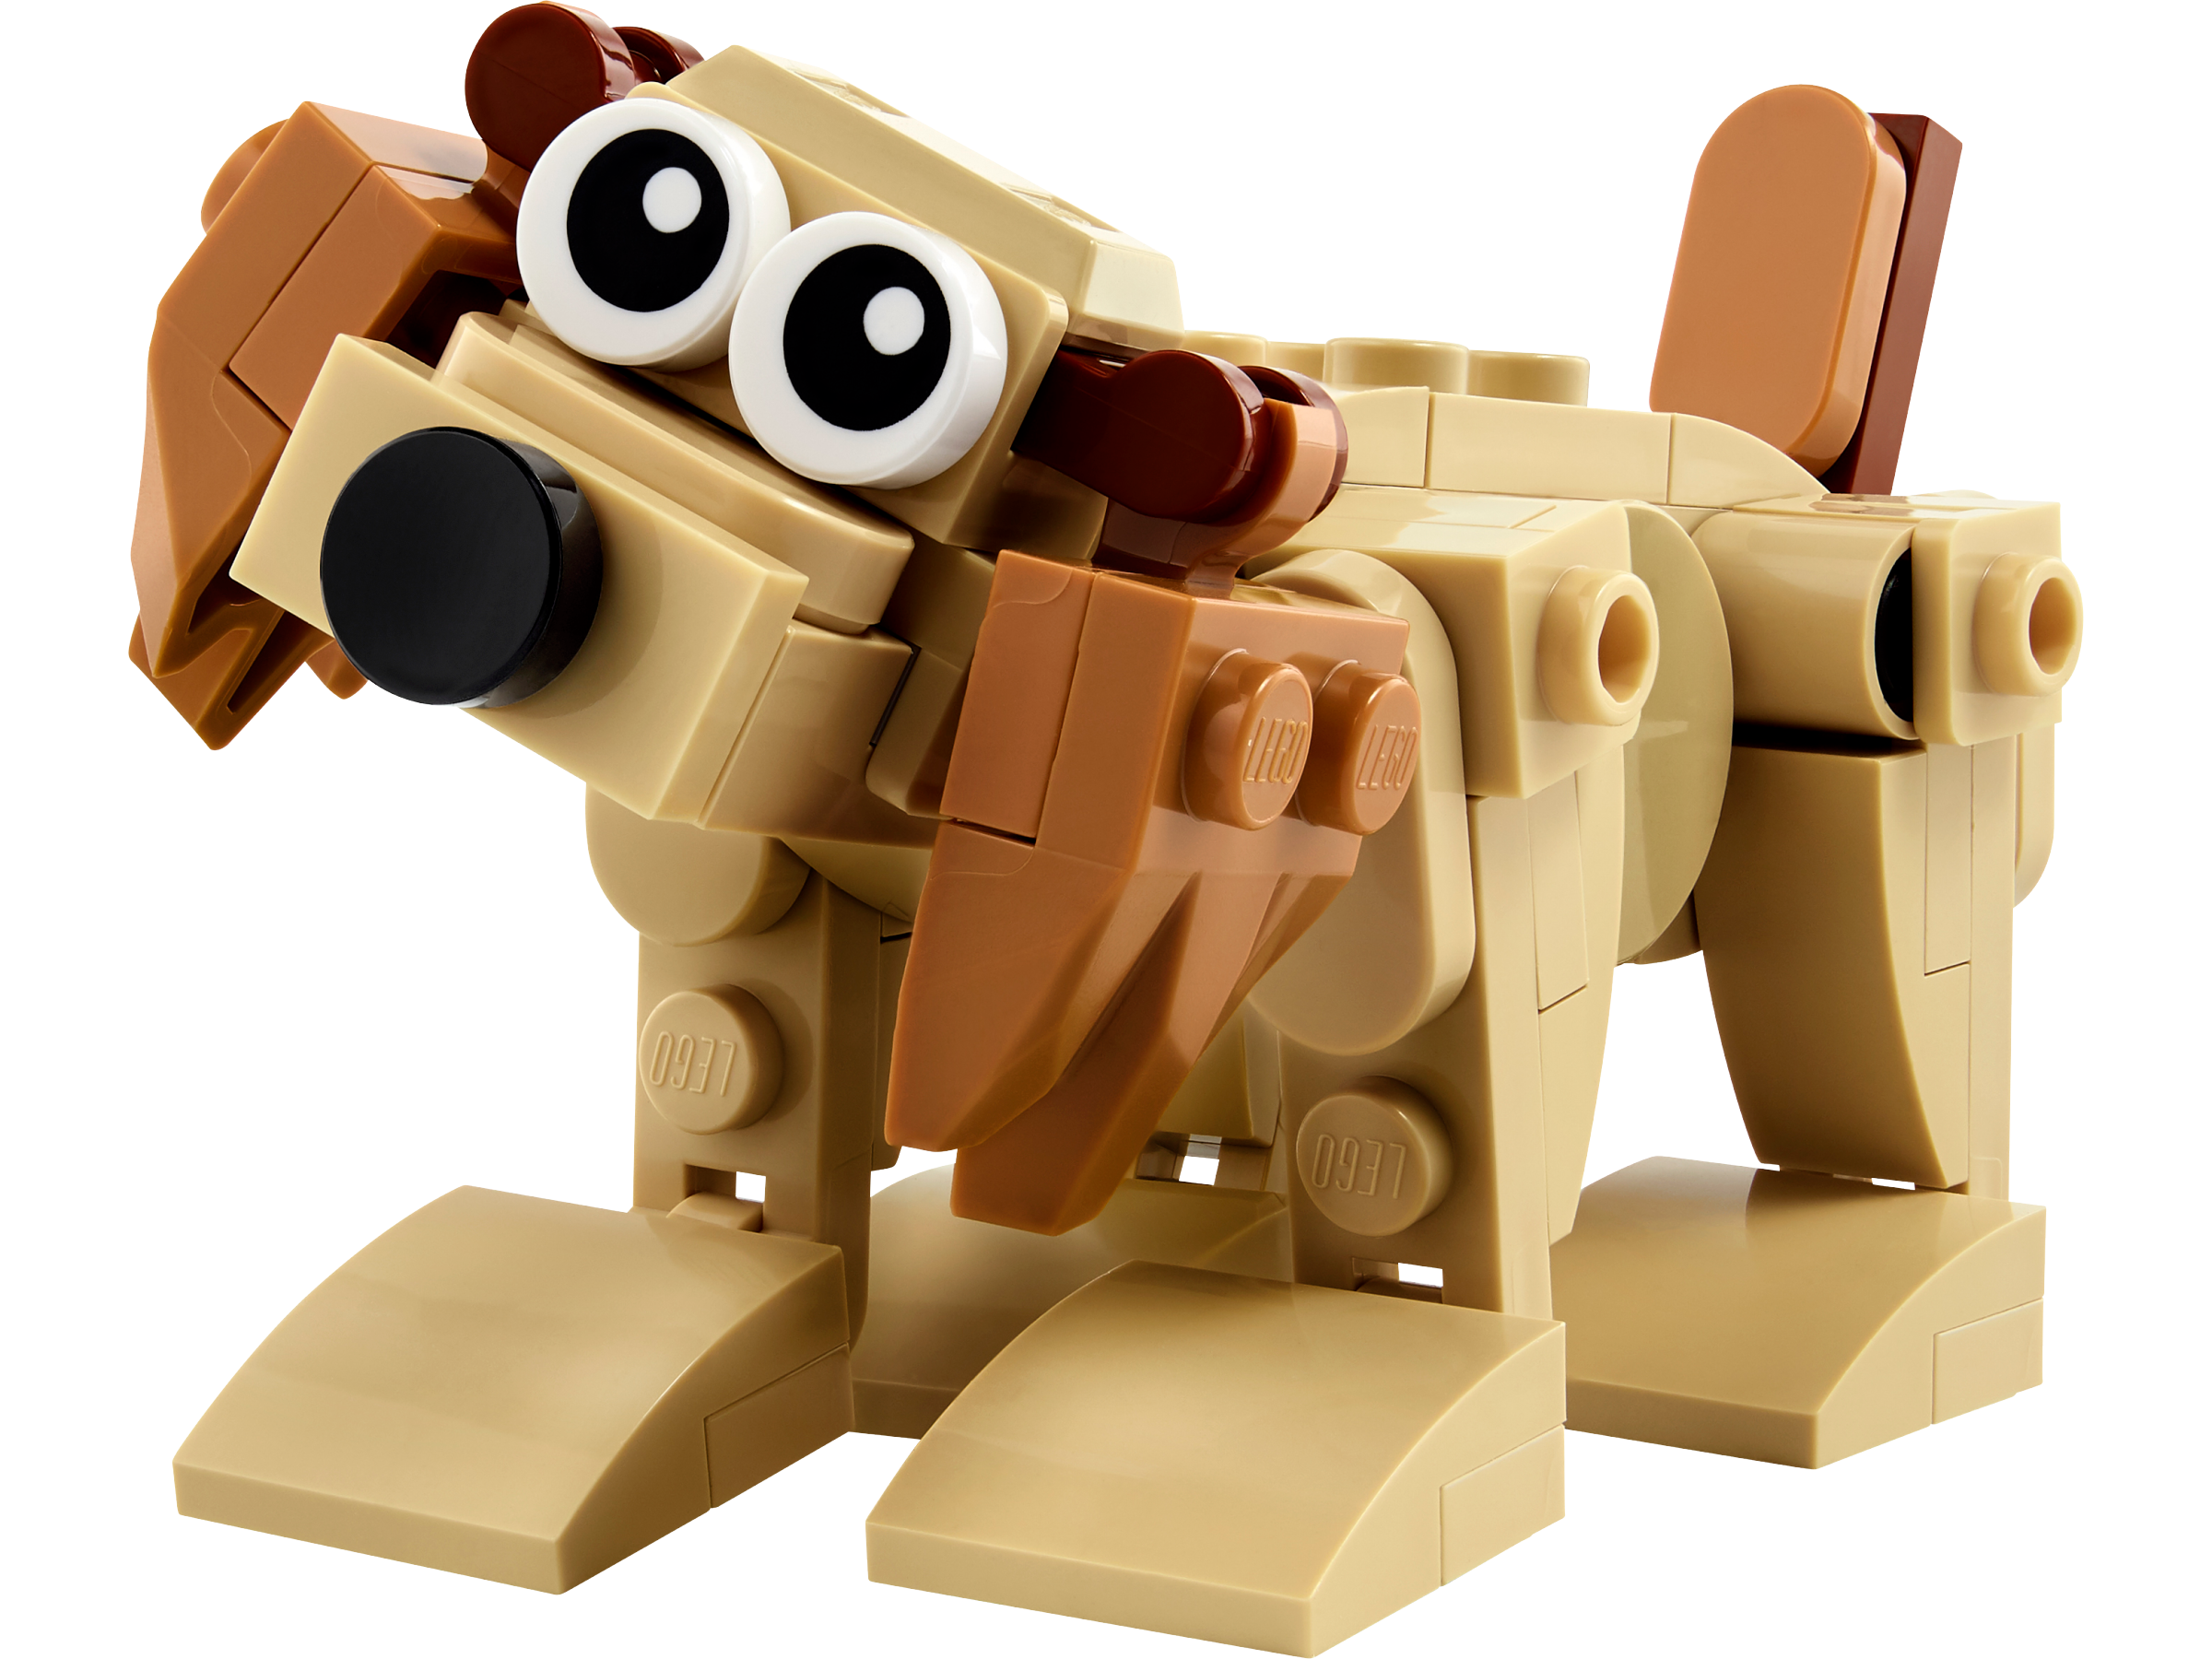 LEGO Creator 30666 Geschenkset mit Tieren Polybag